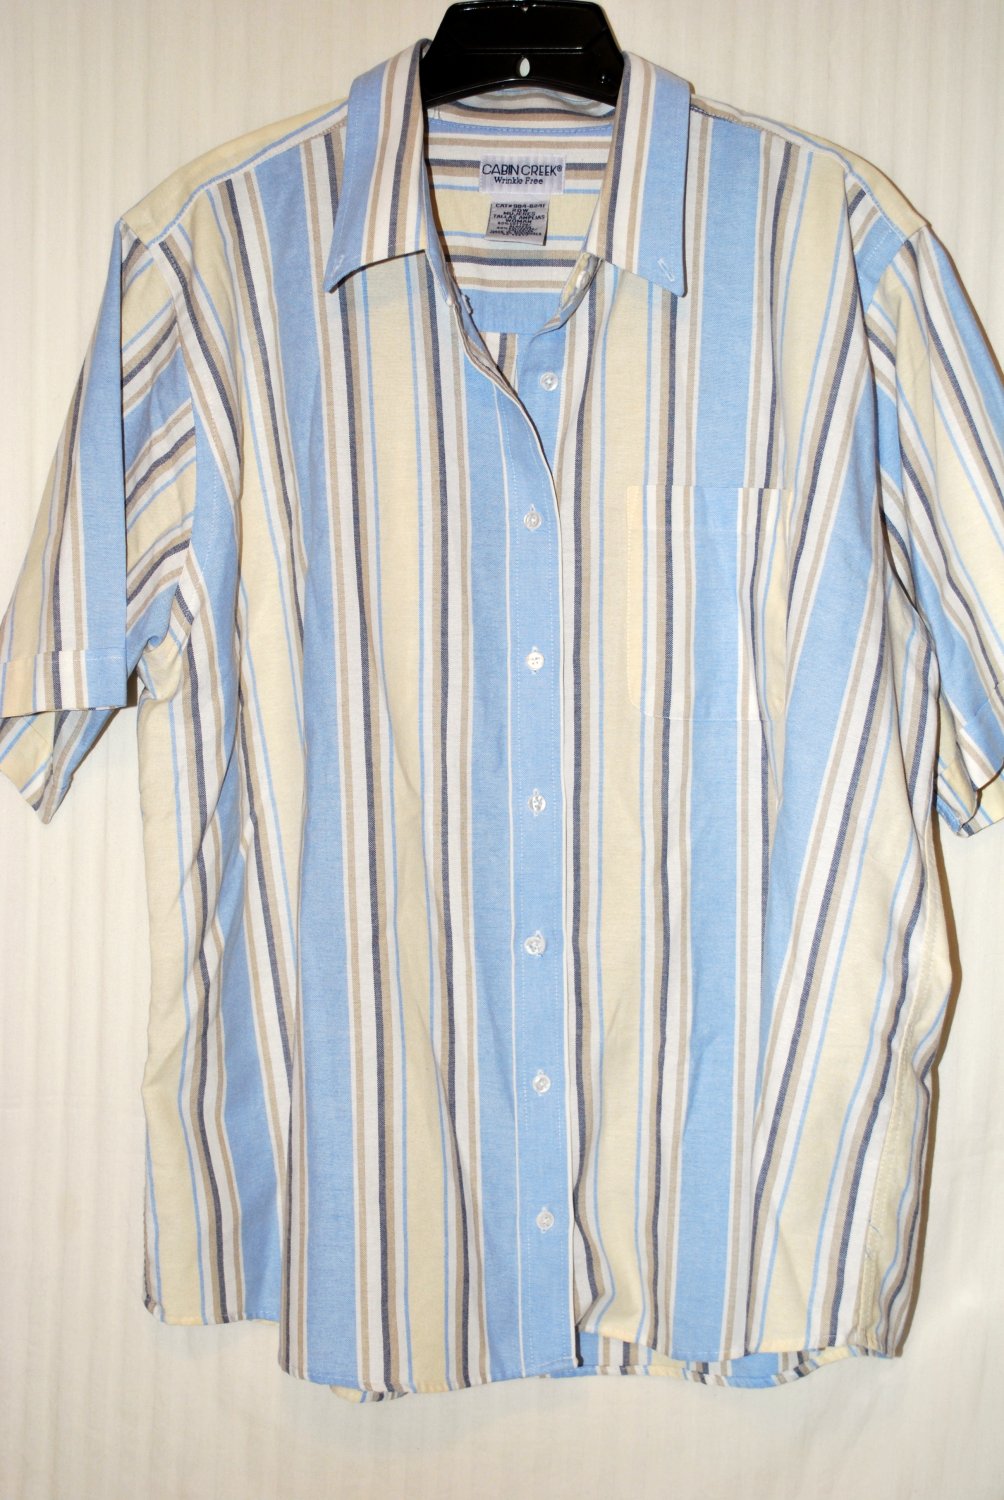 Cabin Creek Striped Short Sleeve Oxford Shirt